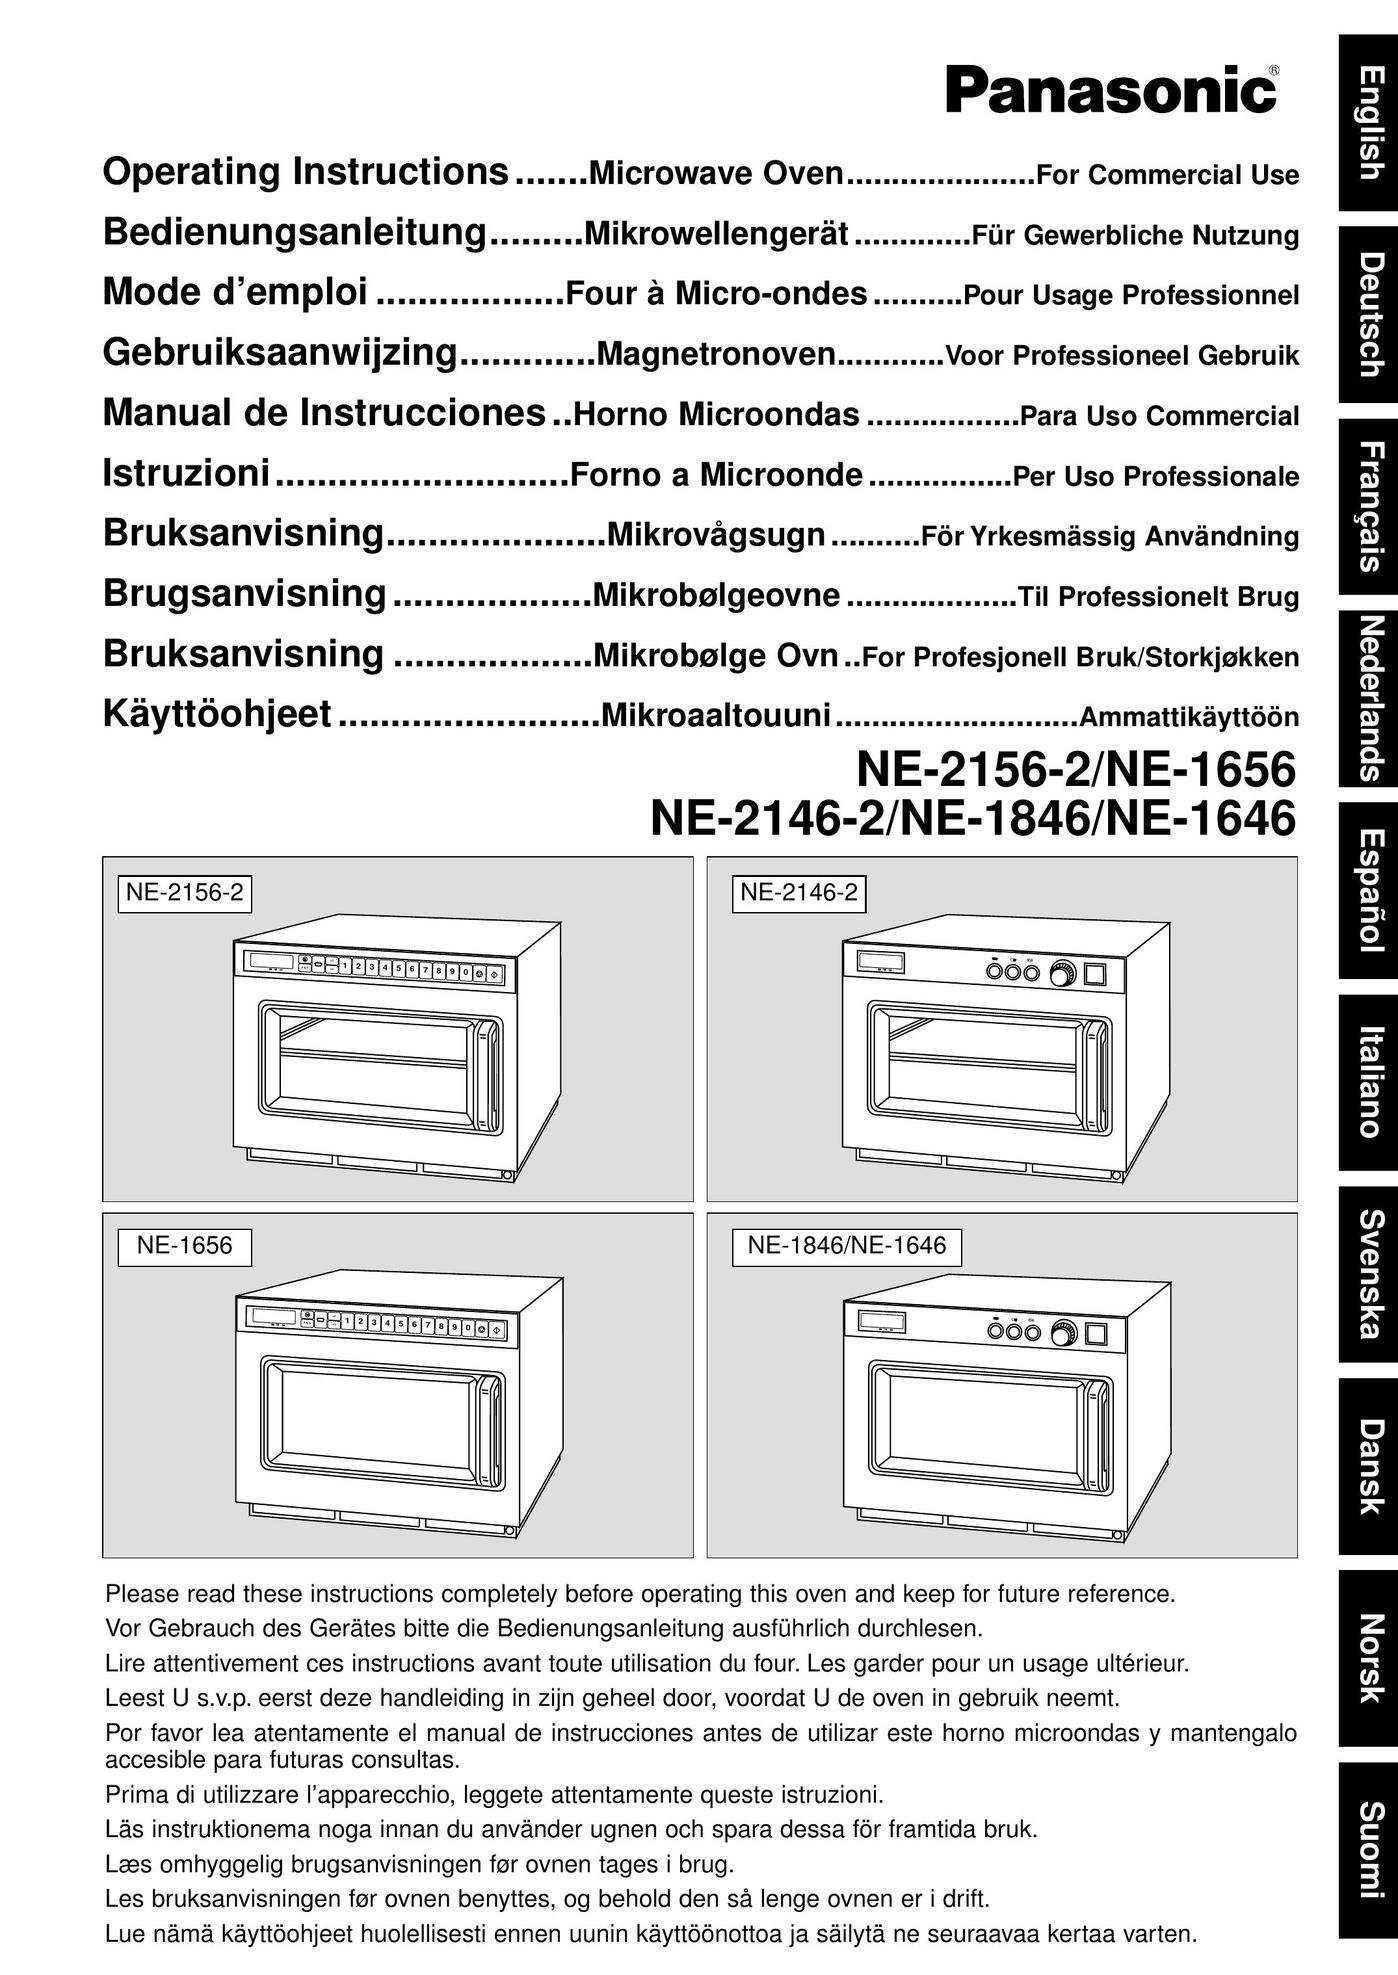 Panasonic NE-1656 Microwave Oven User Manual